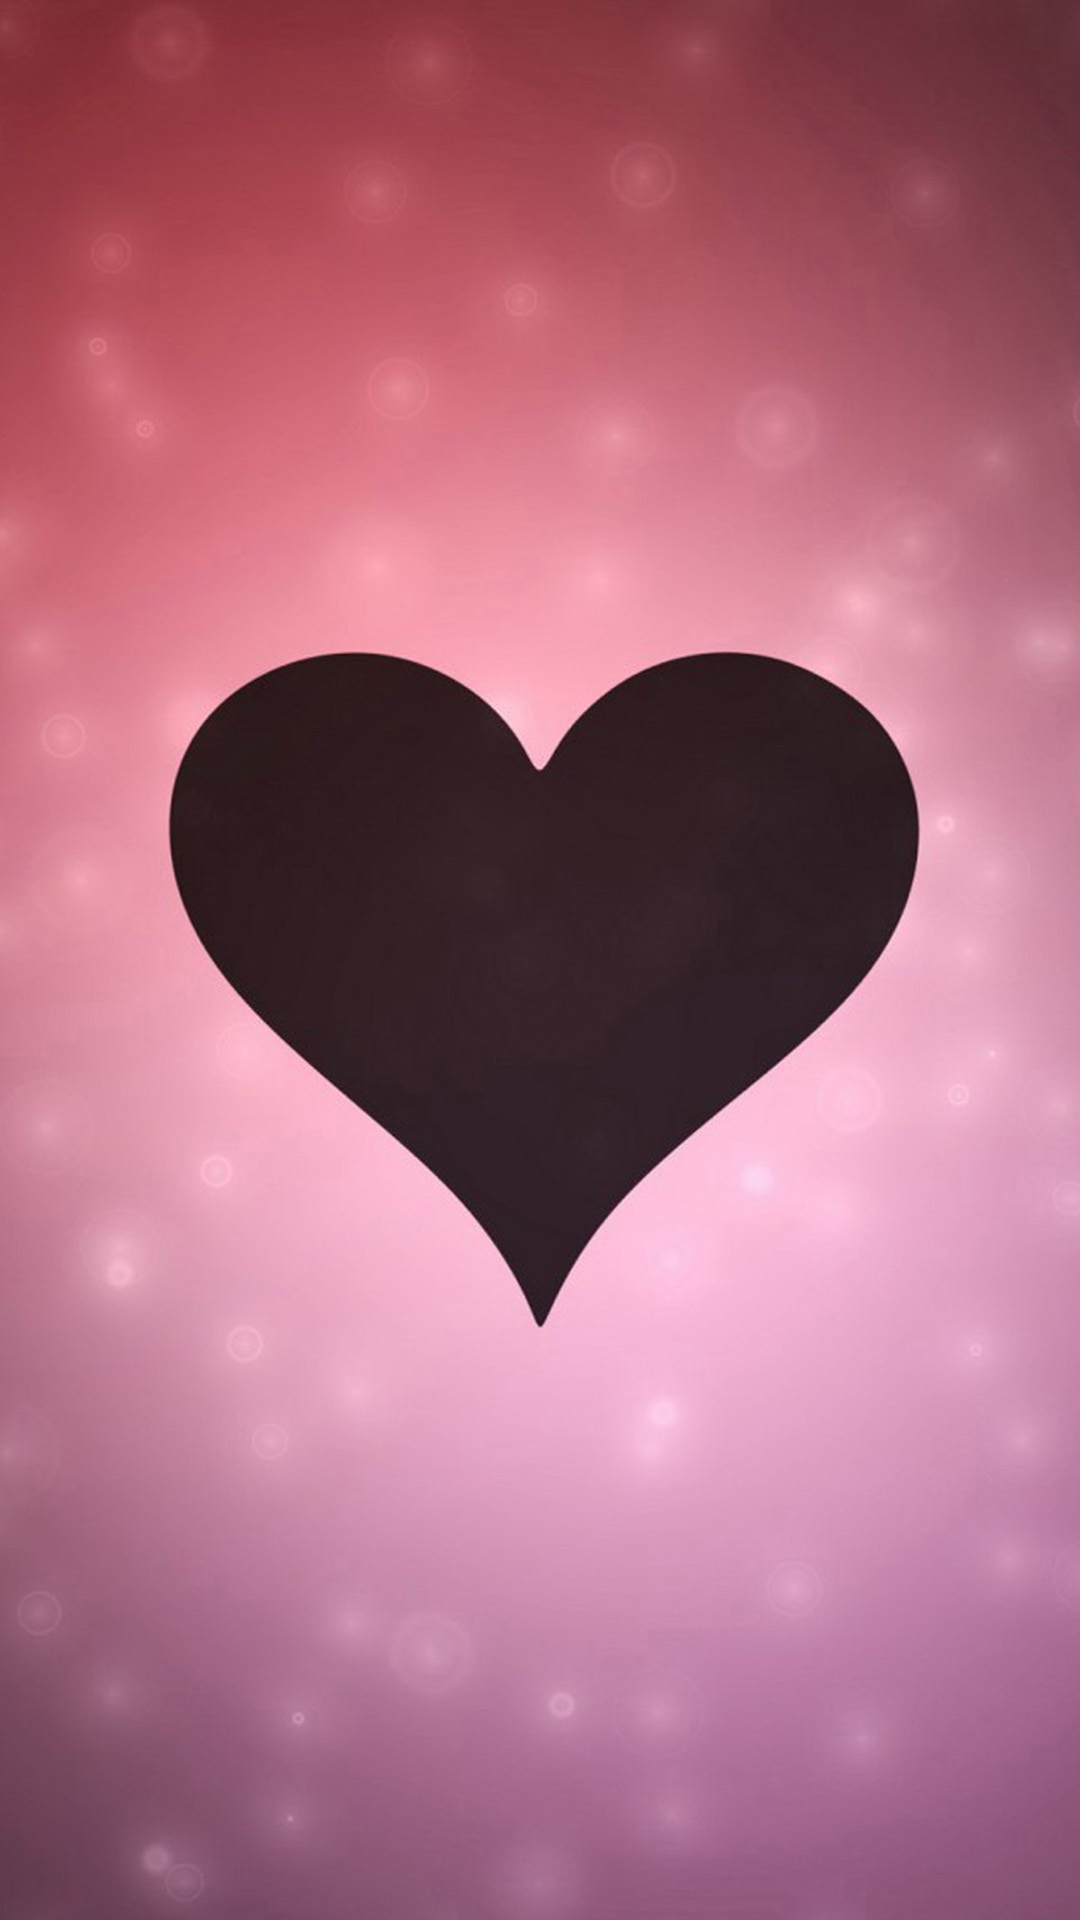 Heart Wallpaper Love Android wallpaper